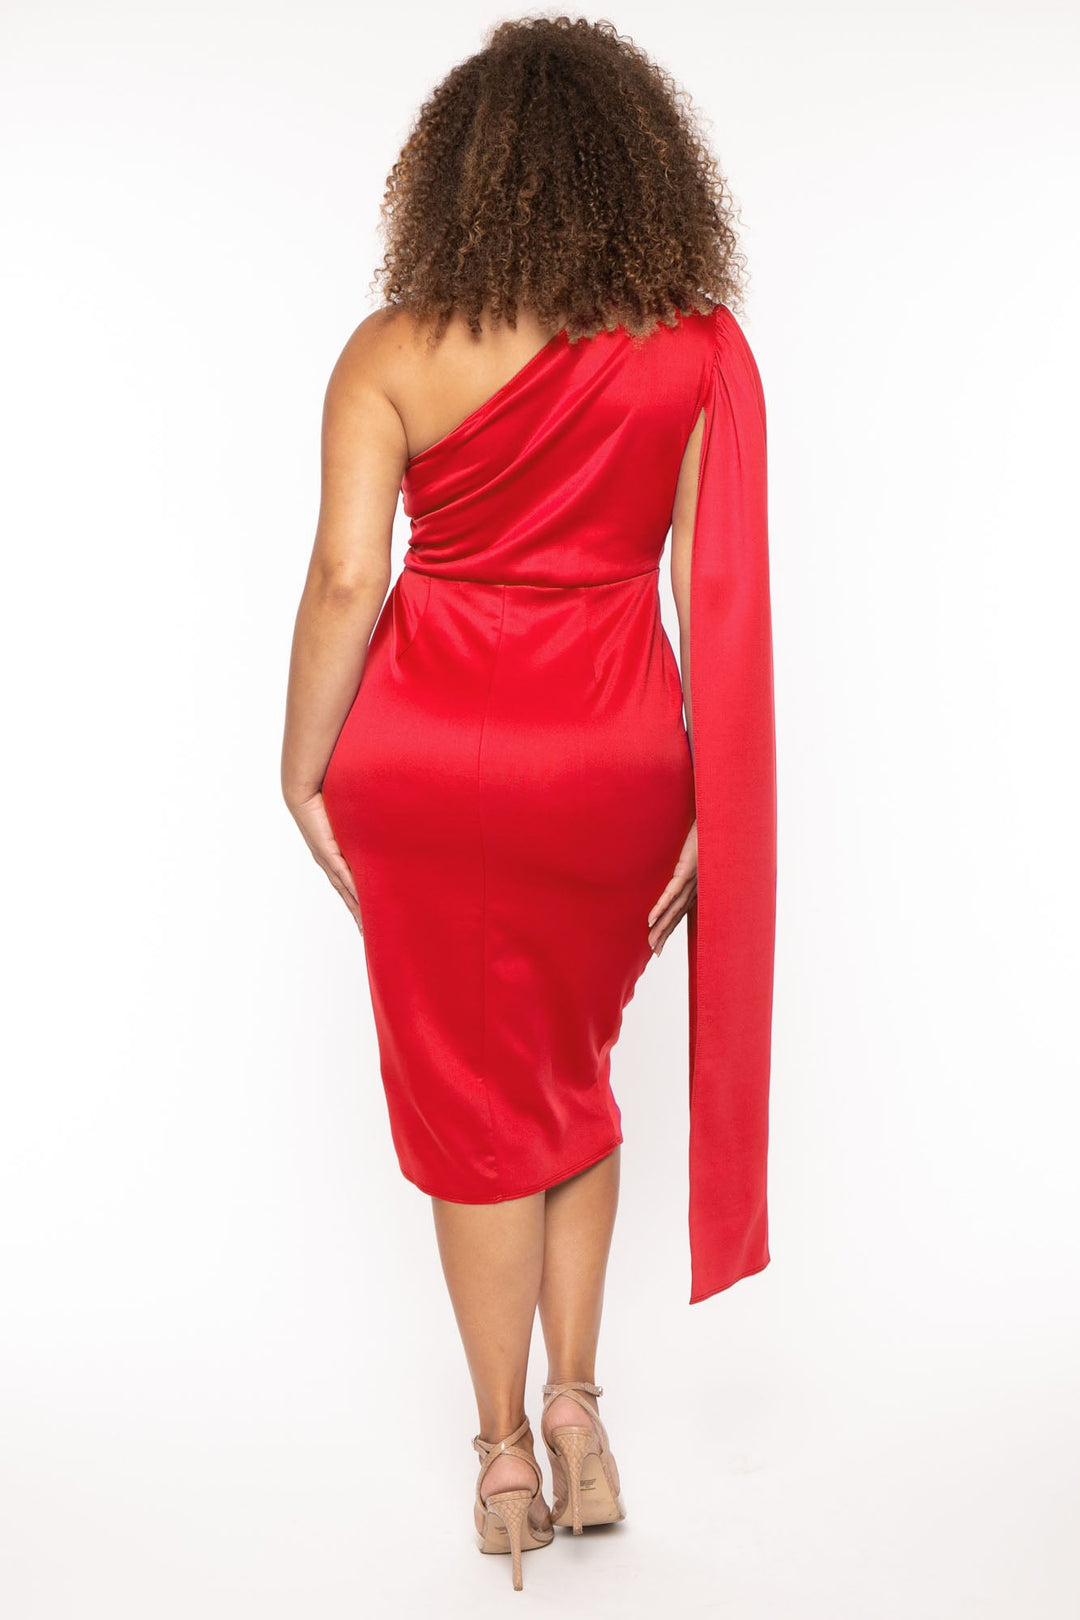 J2 FASHION Dresses Plus Size One Shoulder Cape Midi Dress - Red